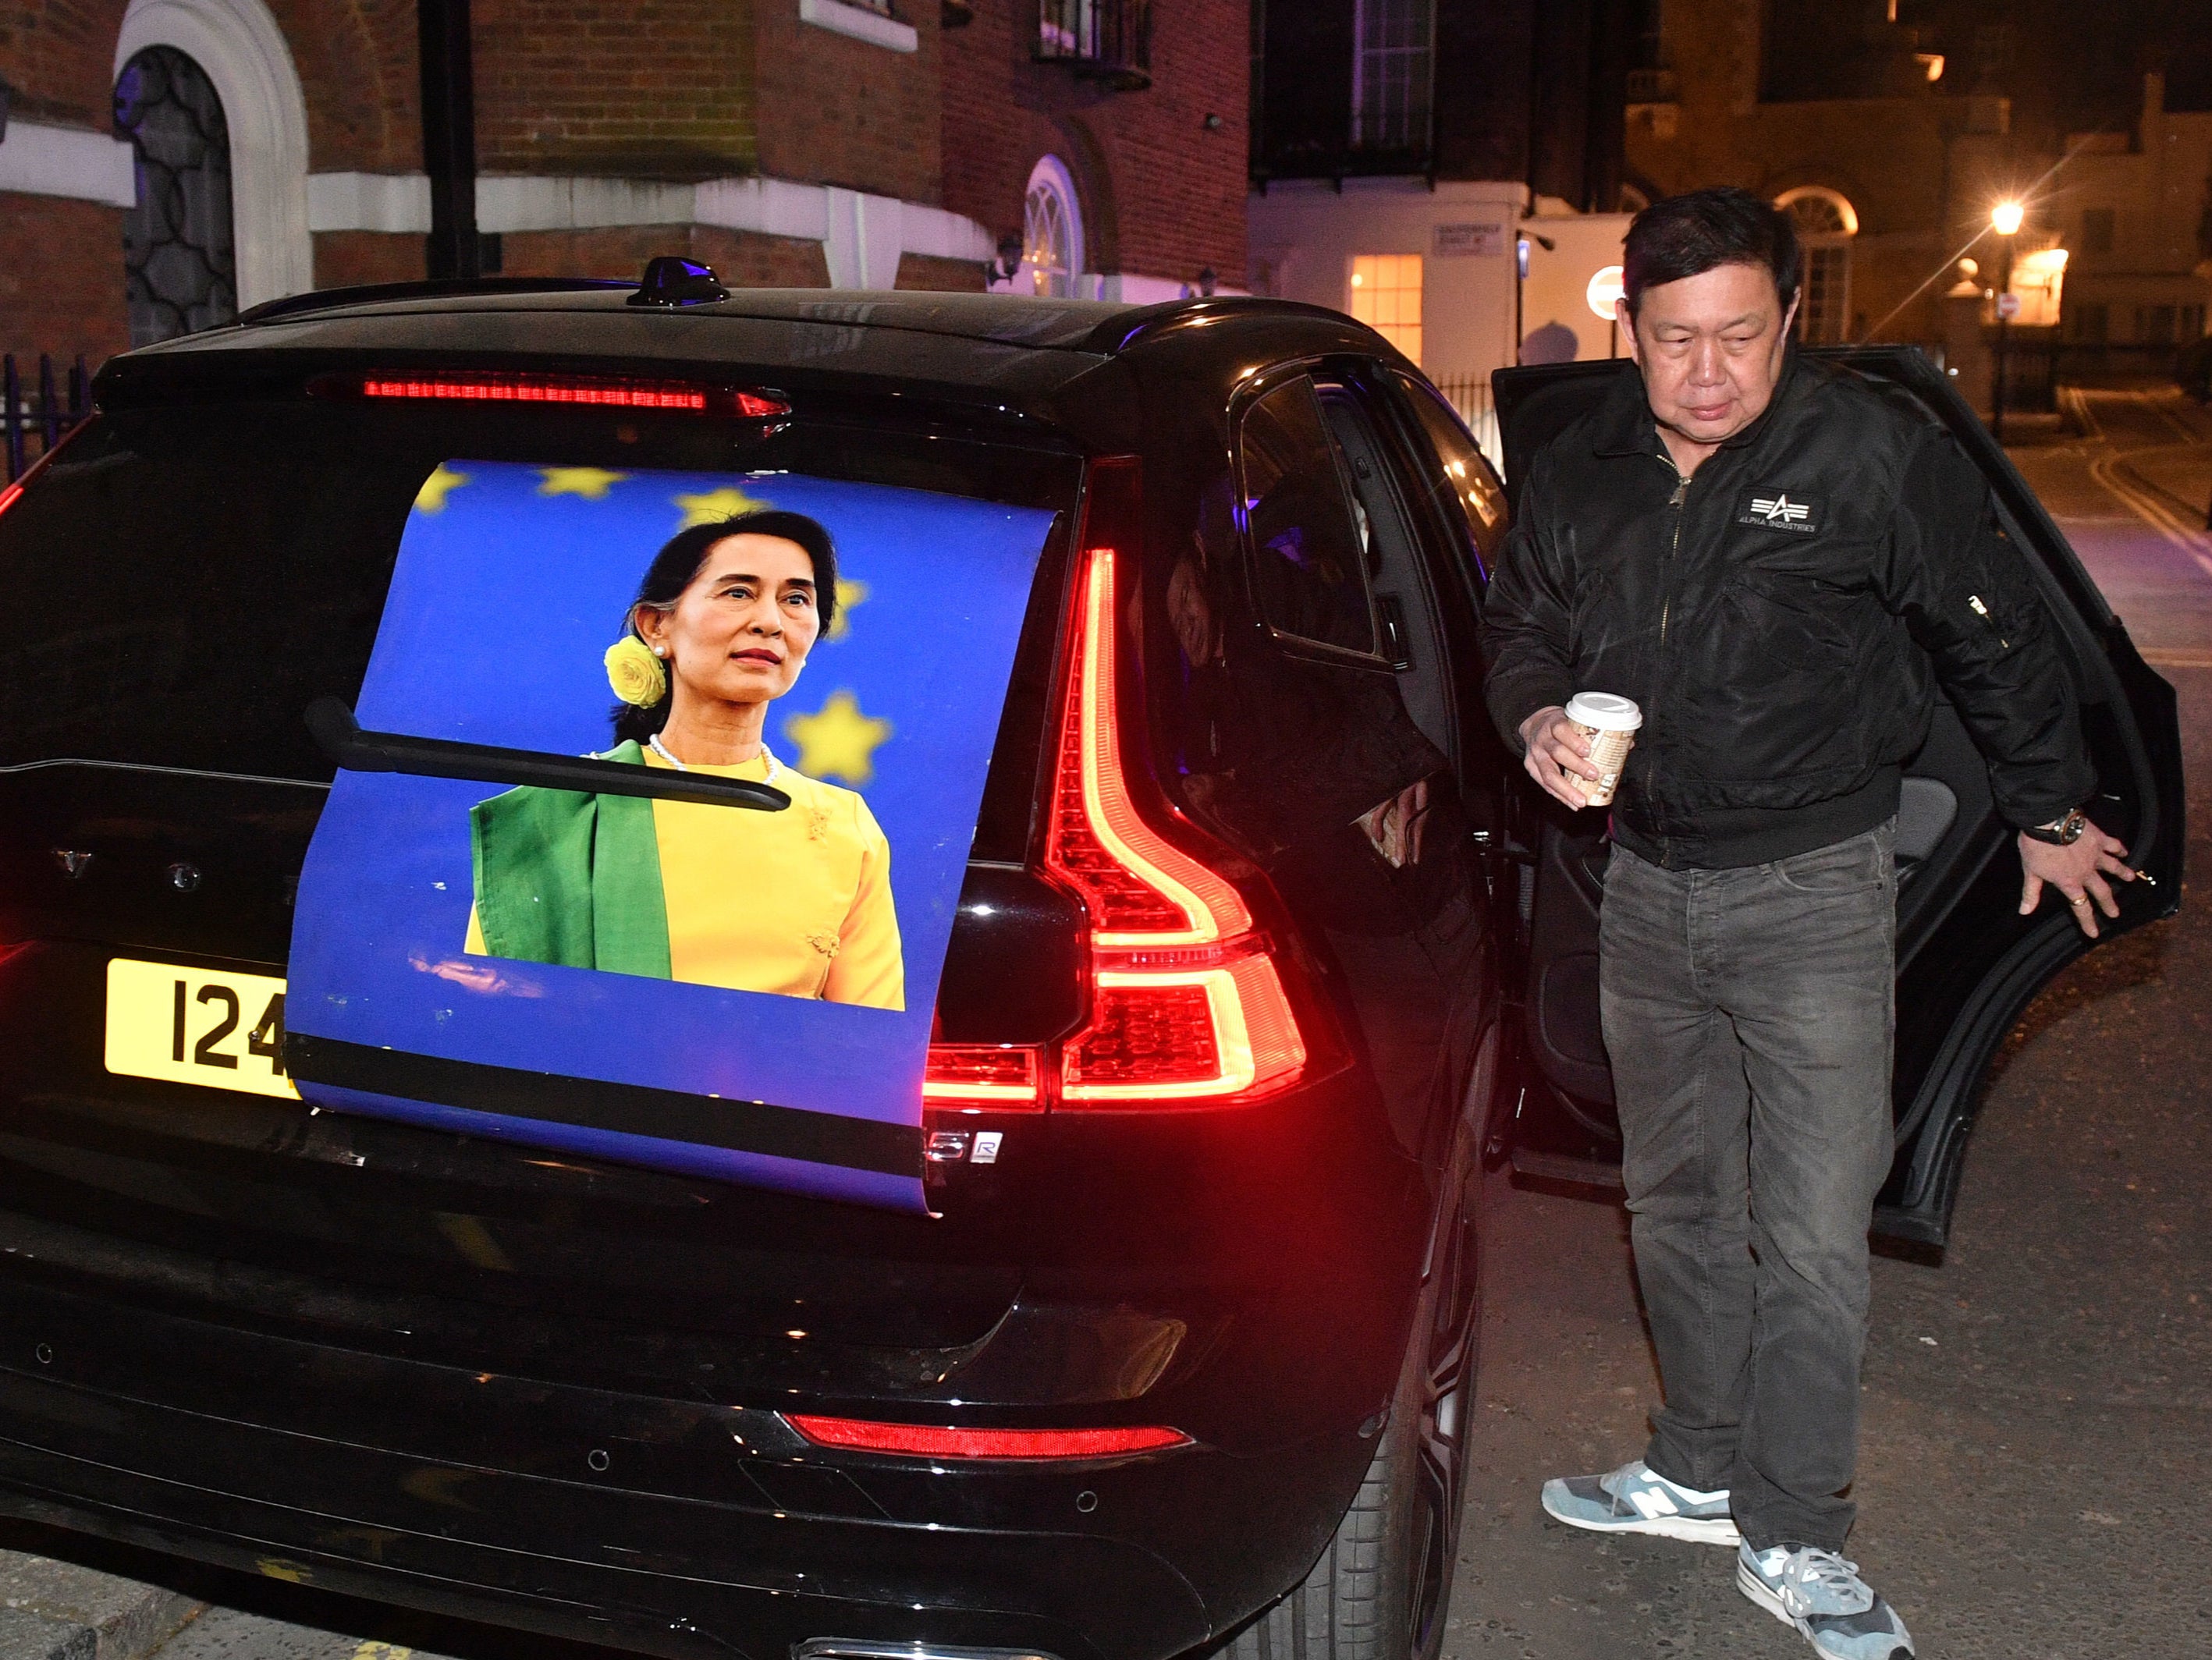 Kyaw Zwar Minn got out of a car bearing a large image of Aung San Suu Kyi